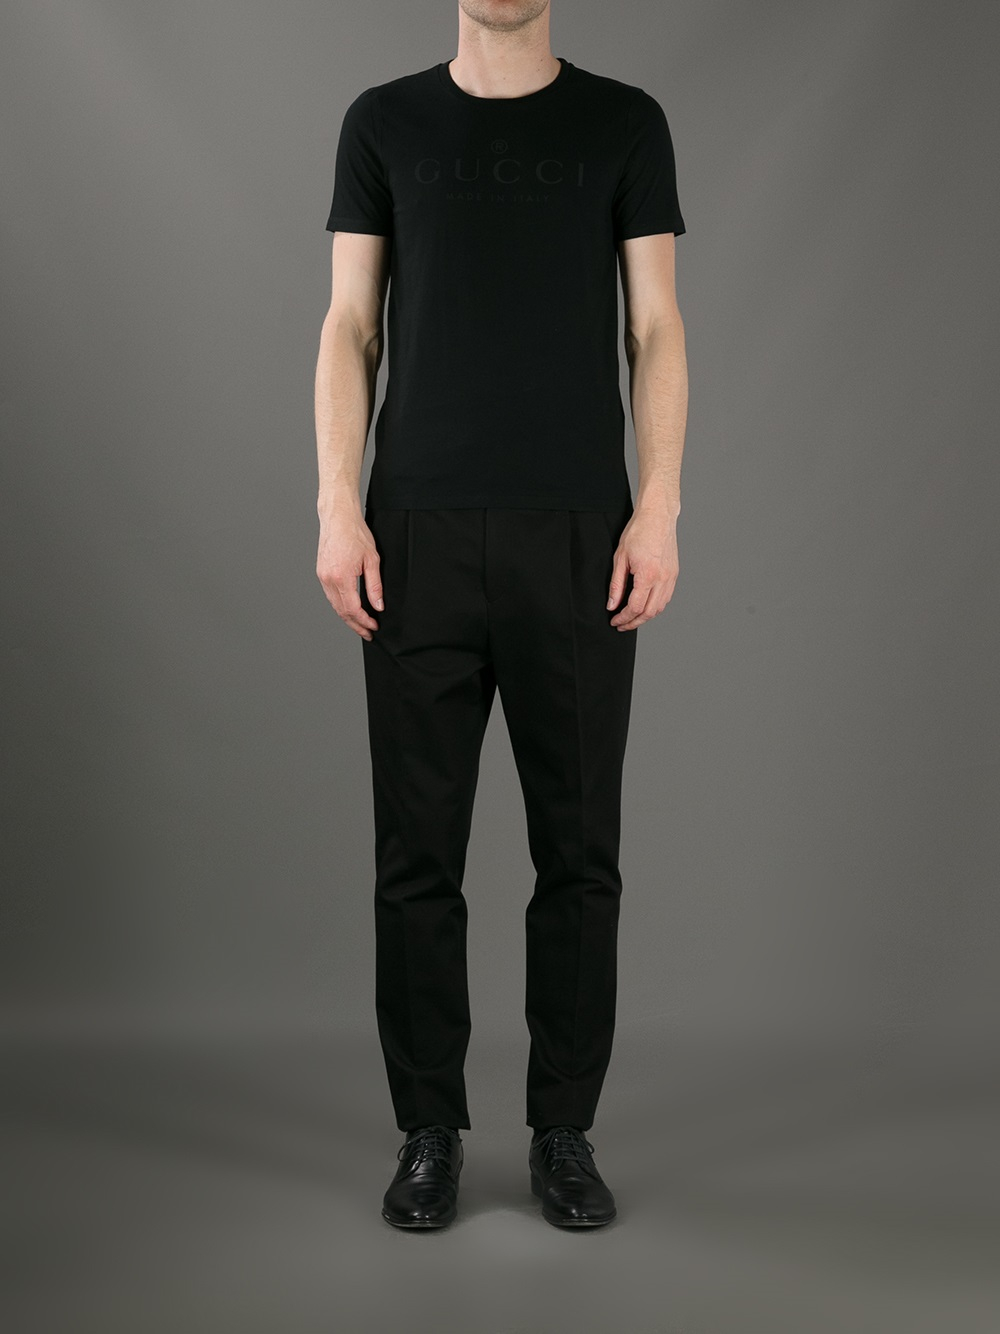 Gucci Logo Print Tshirt in Black for Men | Lyst